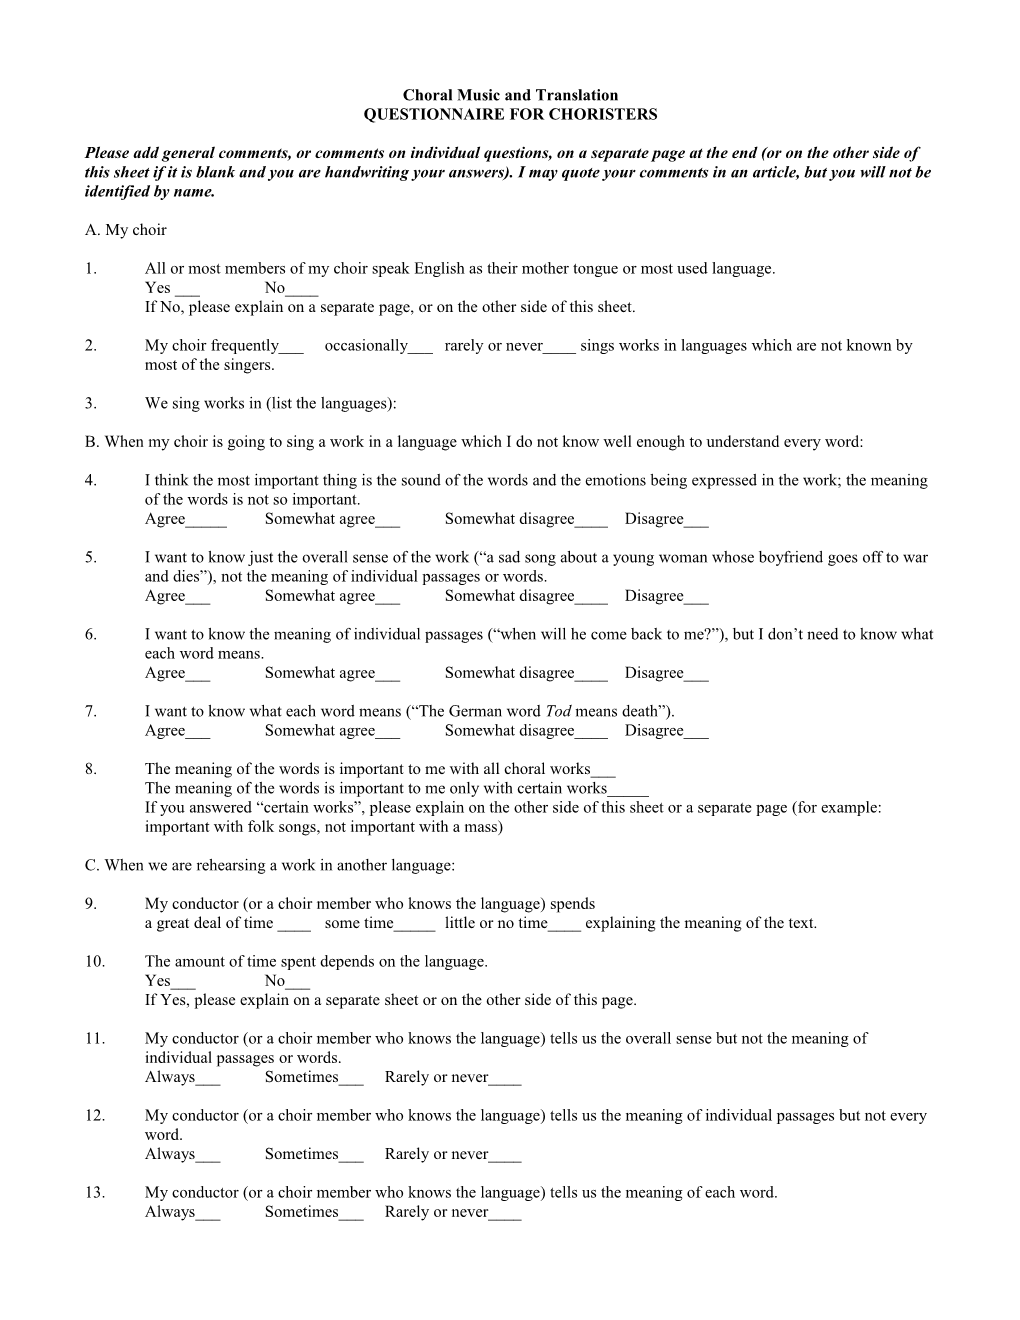 Questionnaire for Conductors